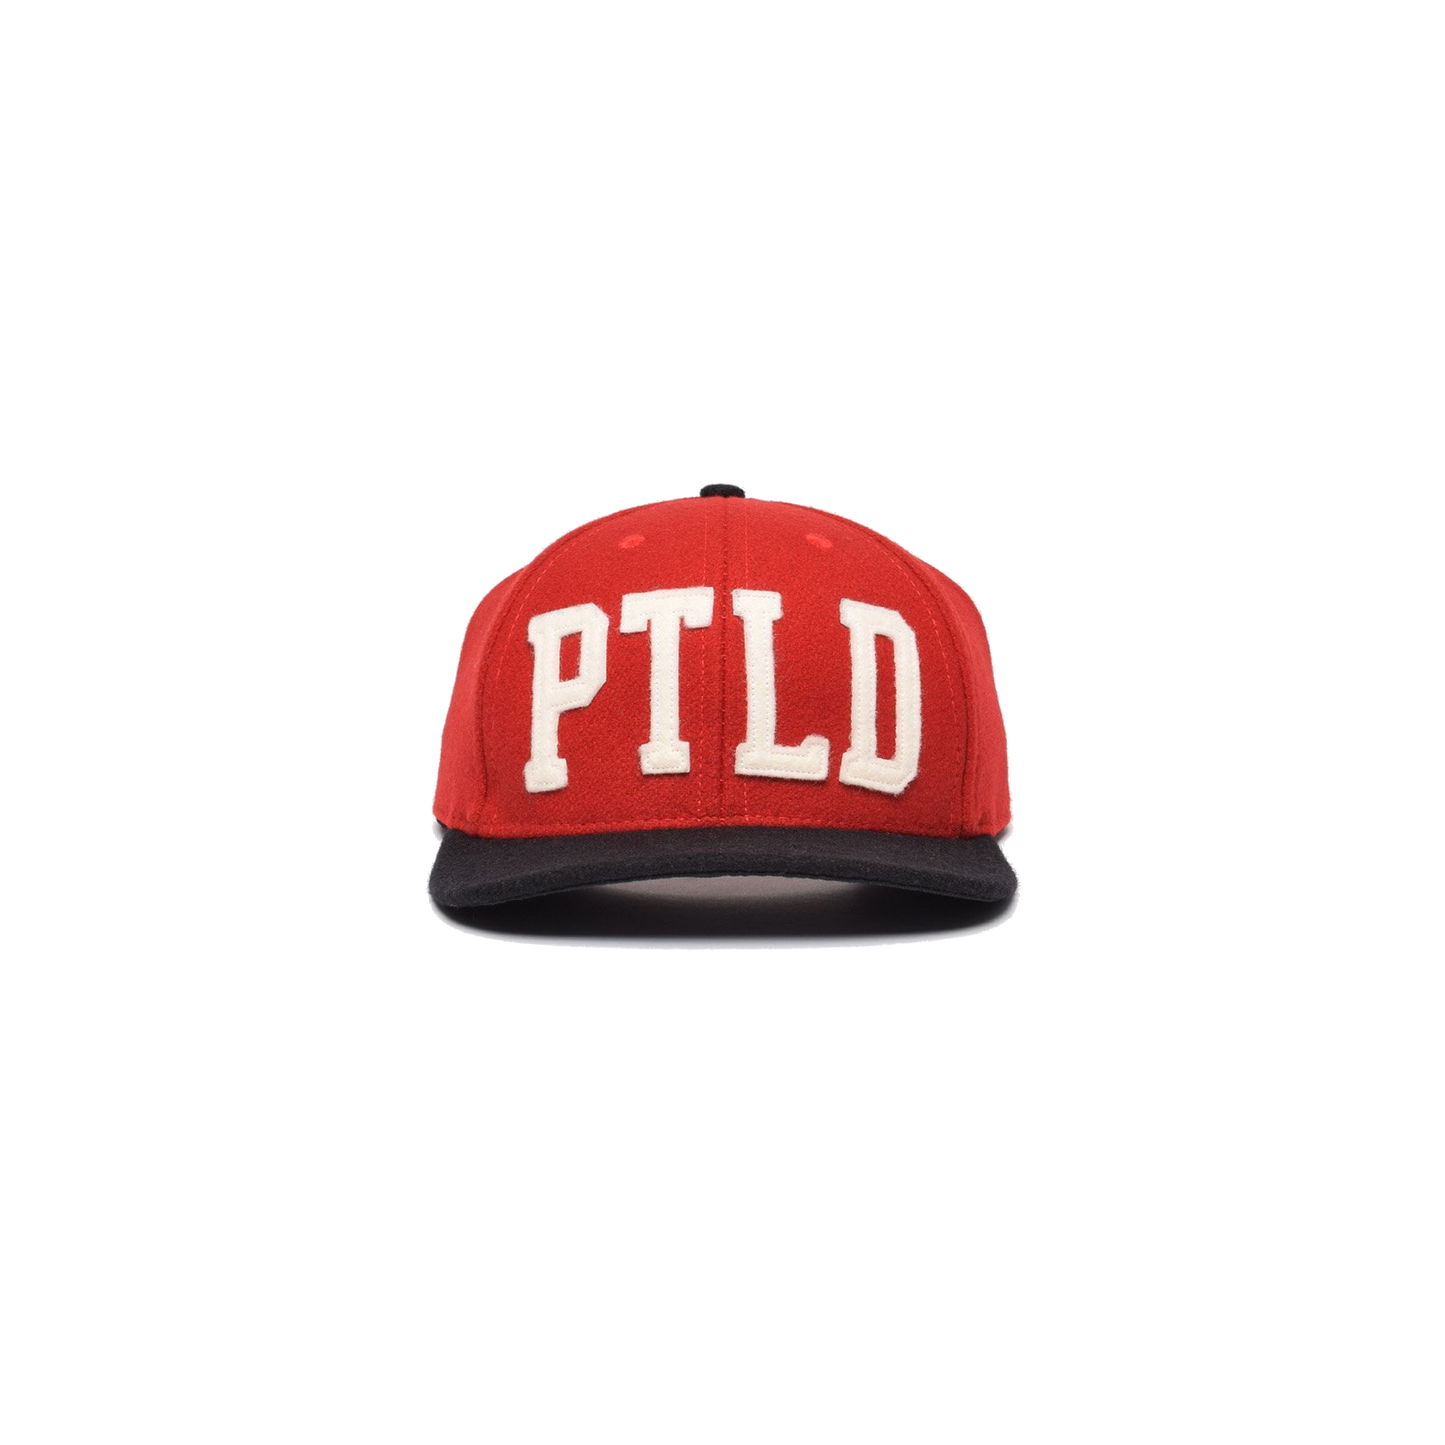 PTLD Baseball Hat